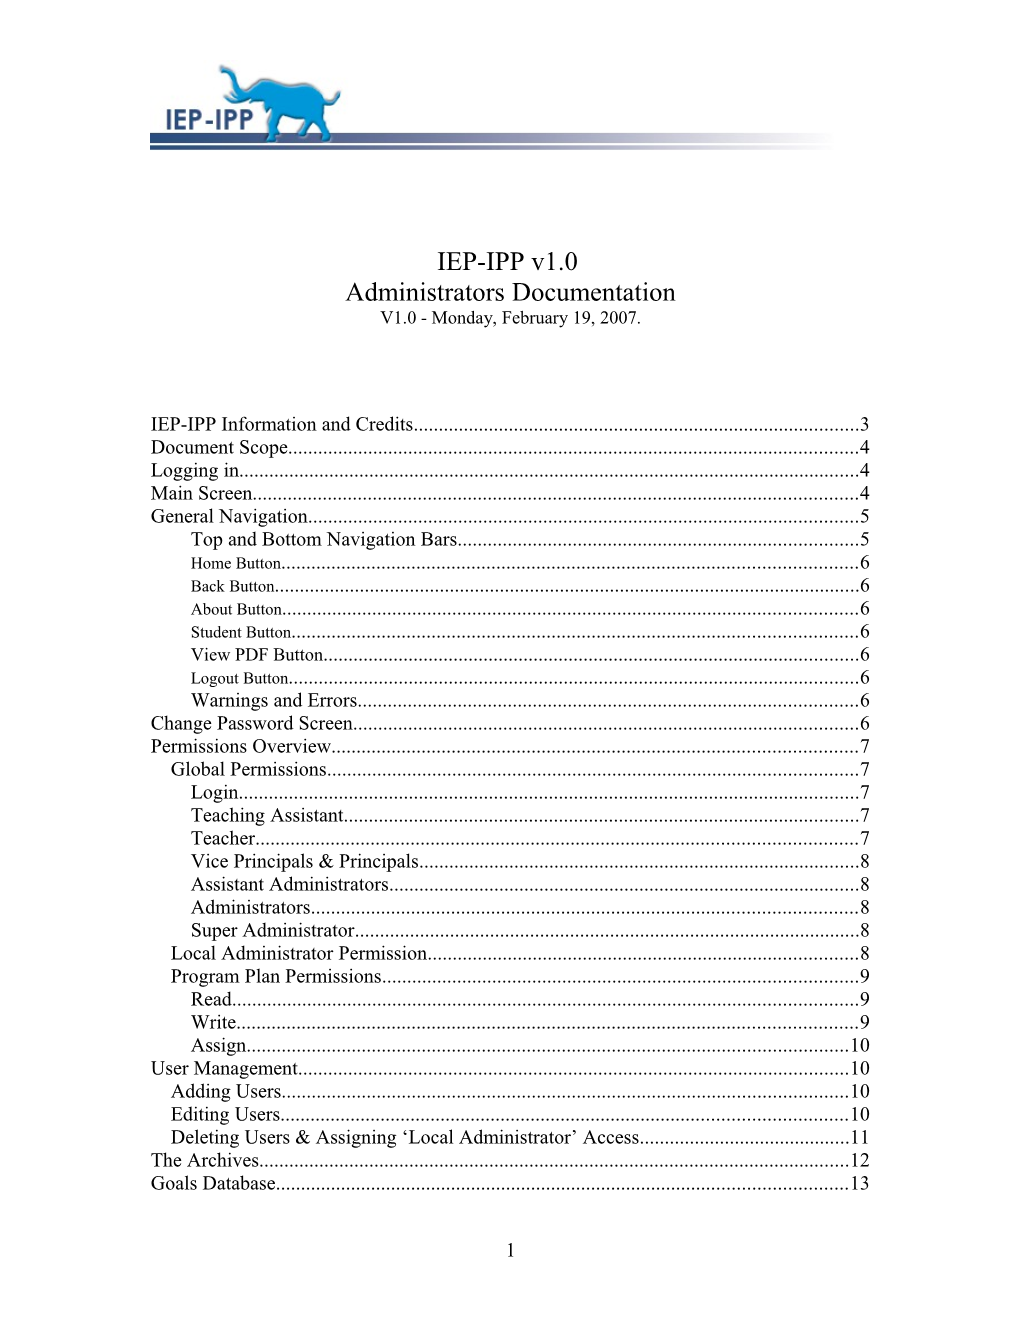 IEP-IPP Information and Credits